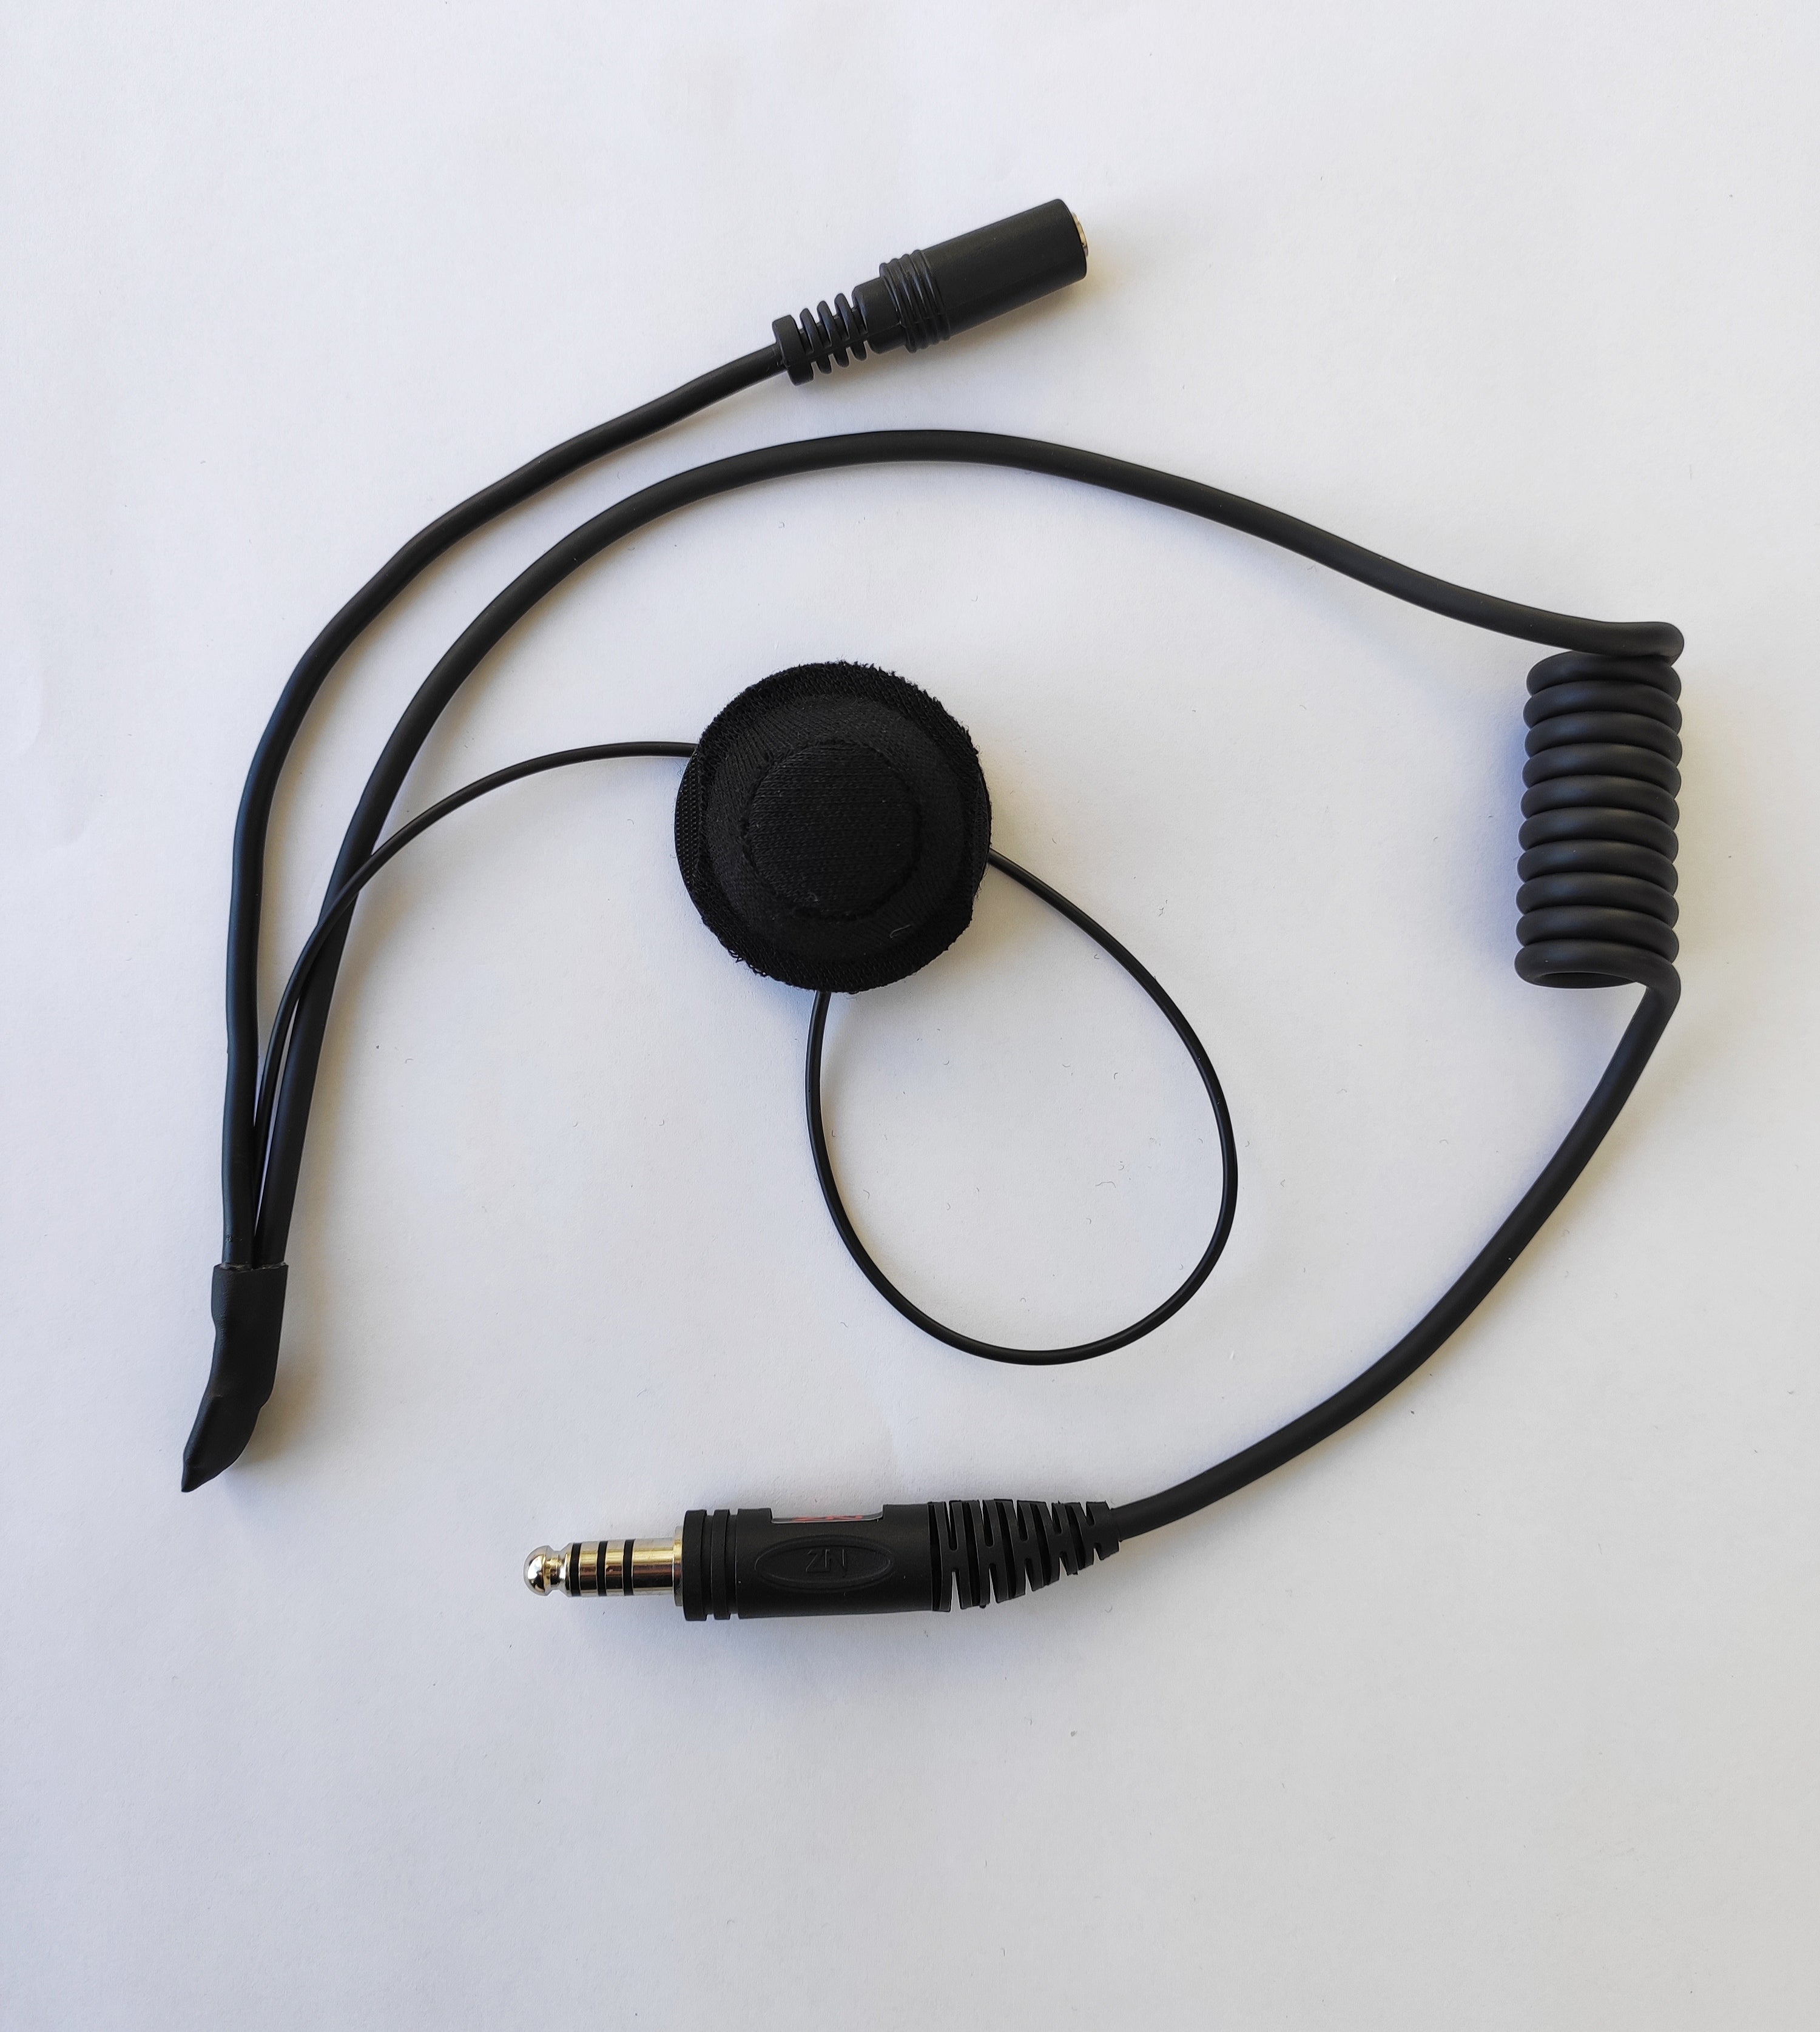 ZERONOISE 6300012 Radio helmet kit for Full Face helmet, Male Nexus 4 PIN, with 3.5mm stereo connector for earplugs Photo-0 